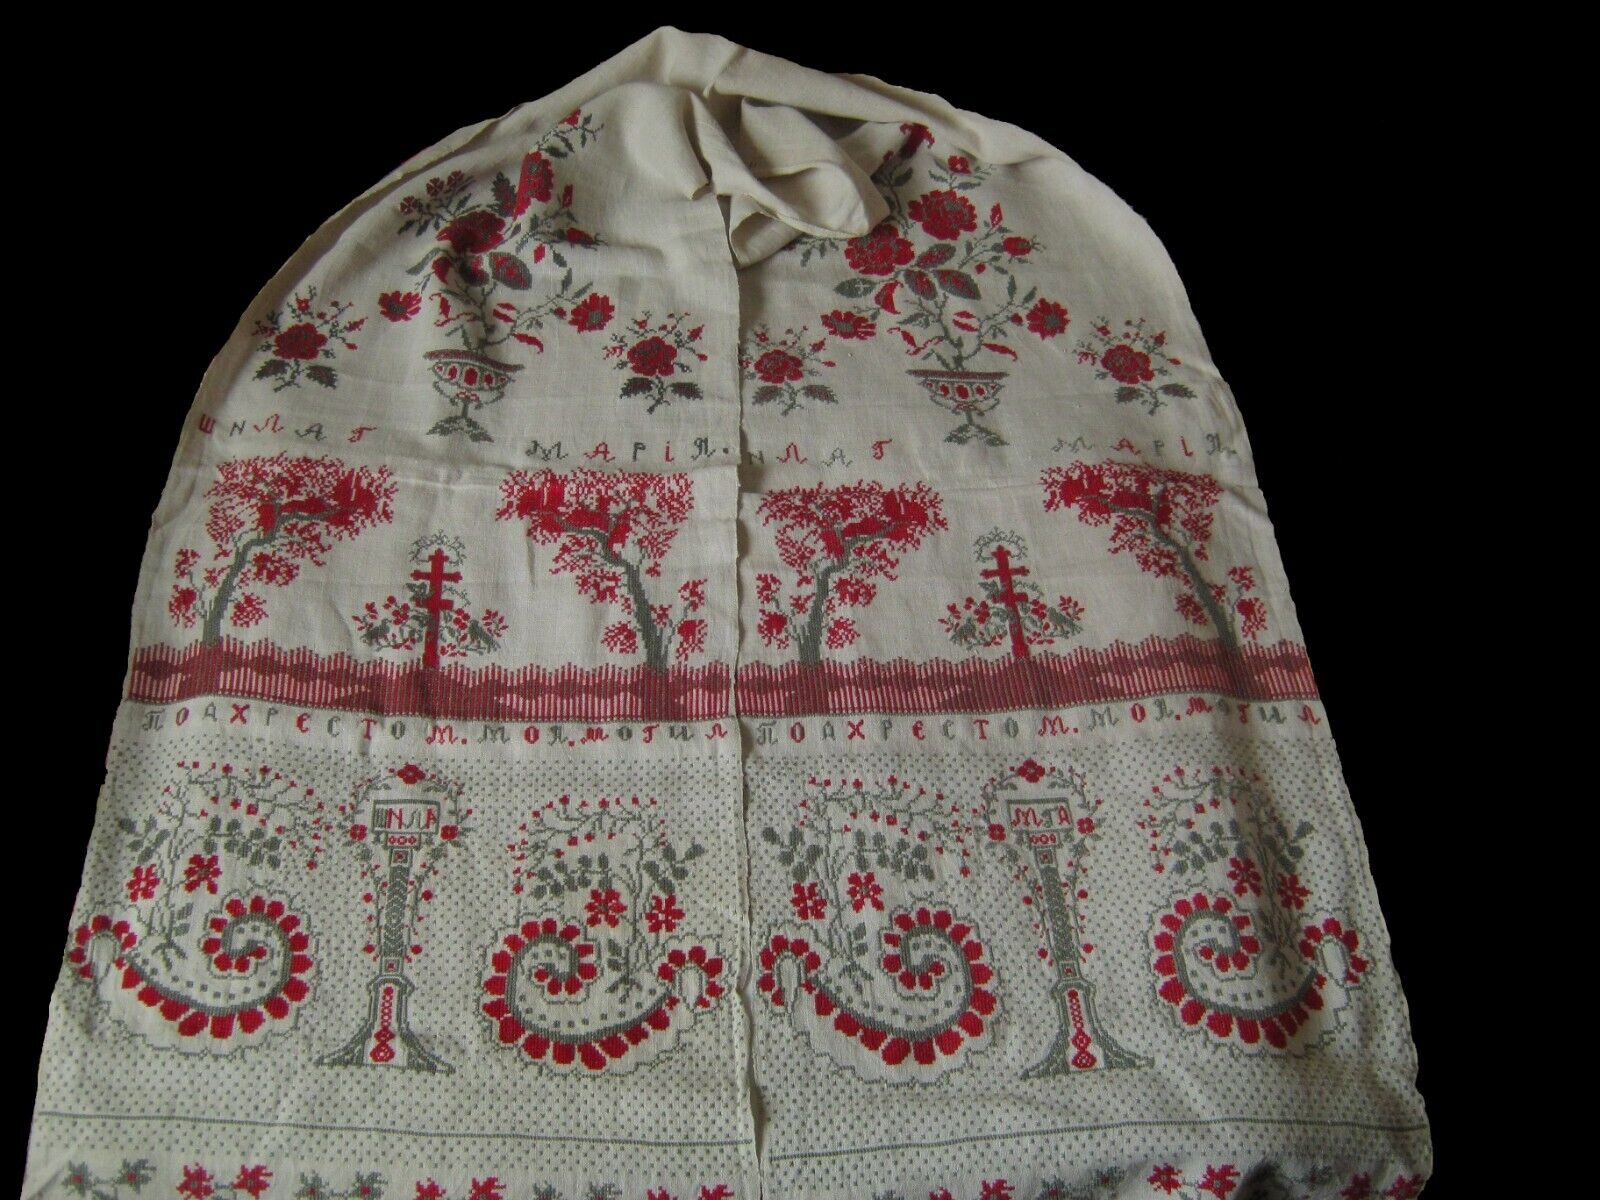 Handmade ceremonial antique Ukrainian towel with embroidery